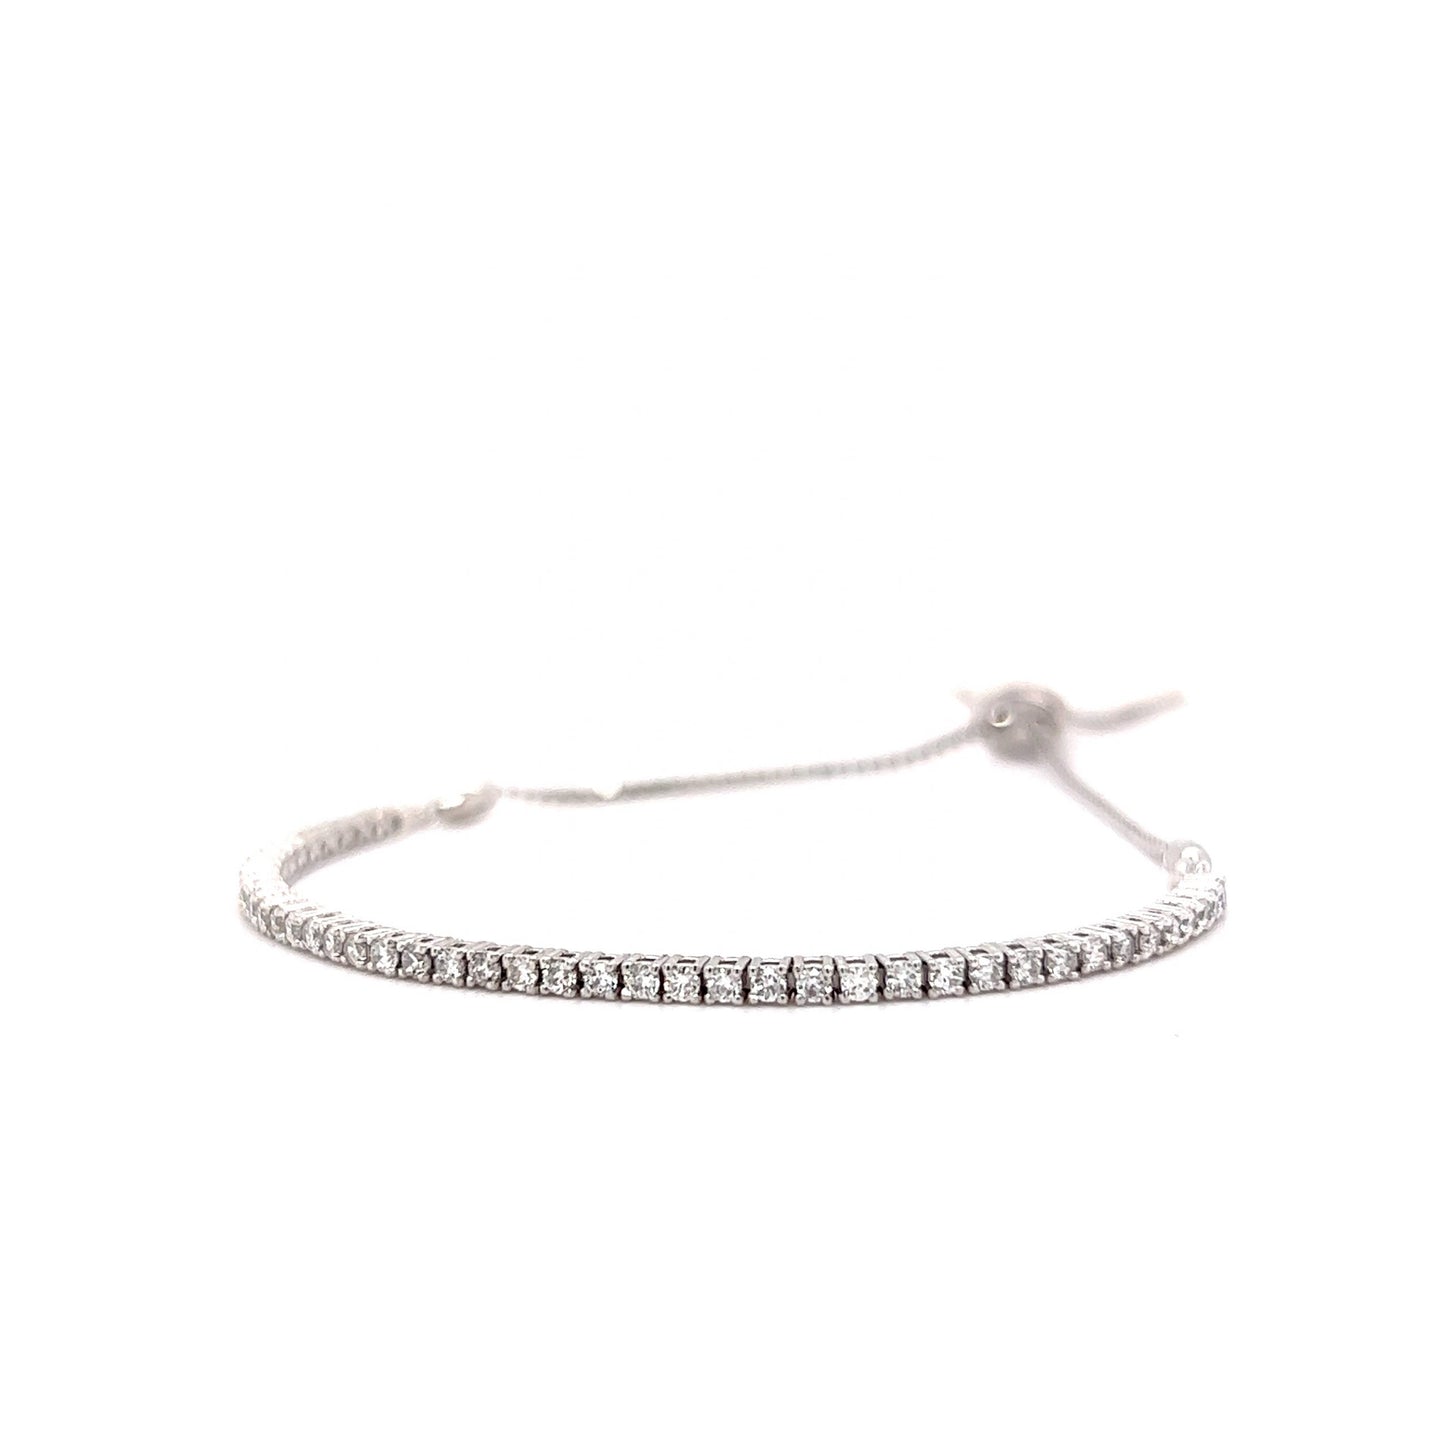 Adjustable Diamond Tennis Bracelet in 14k White Gold